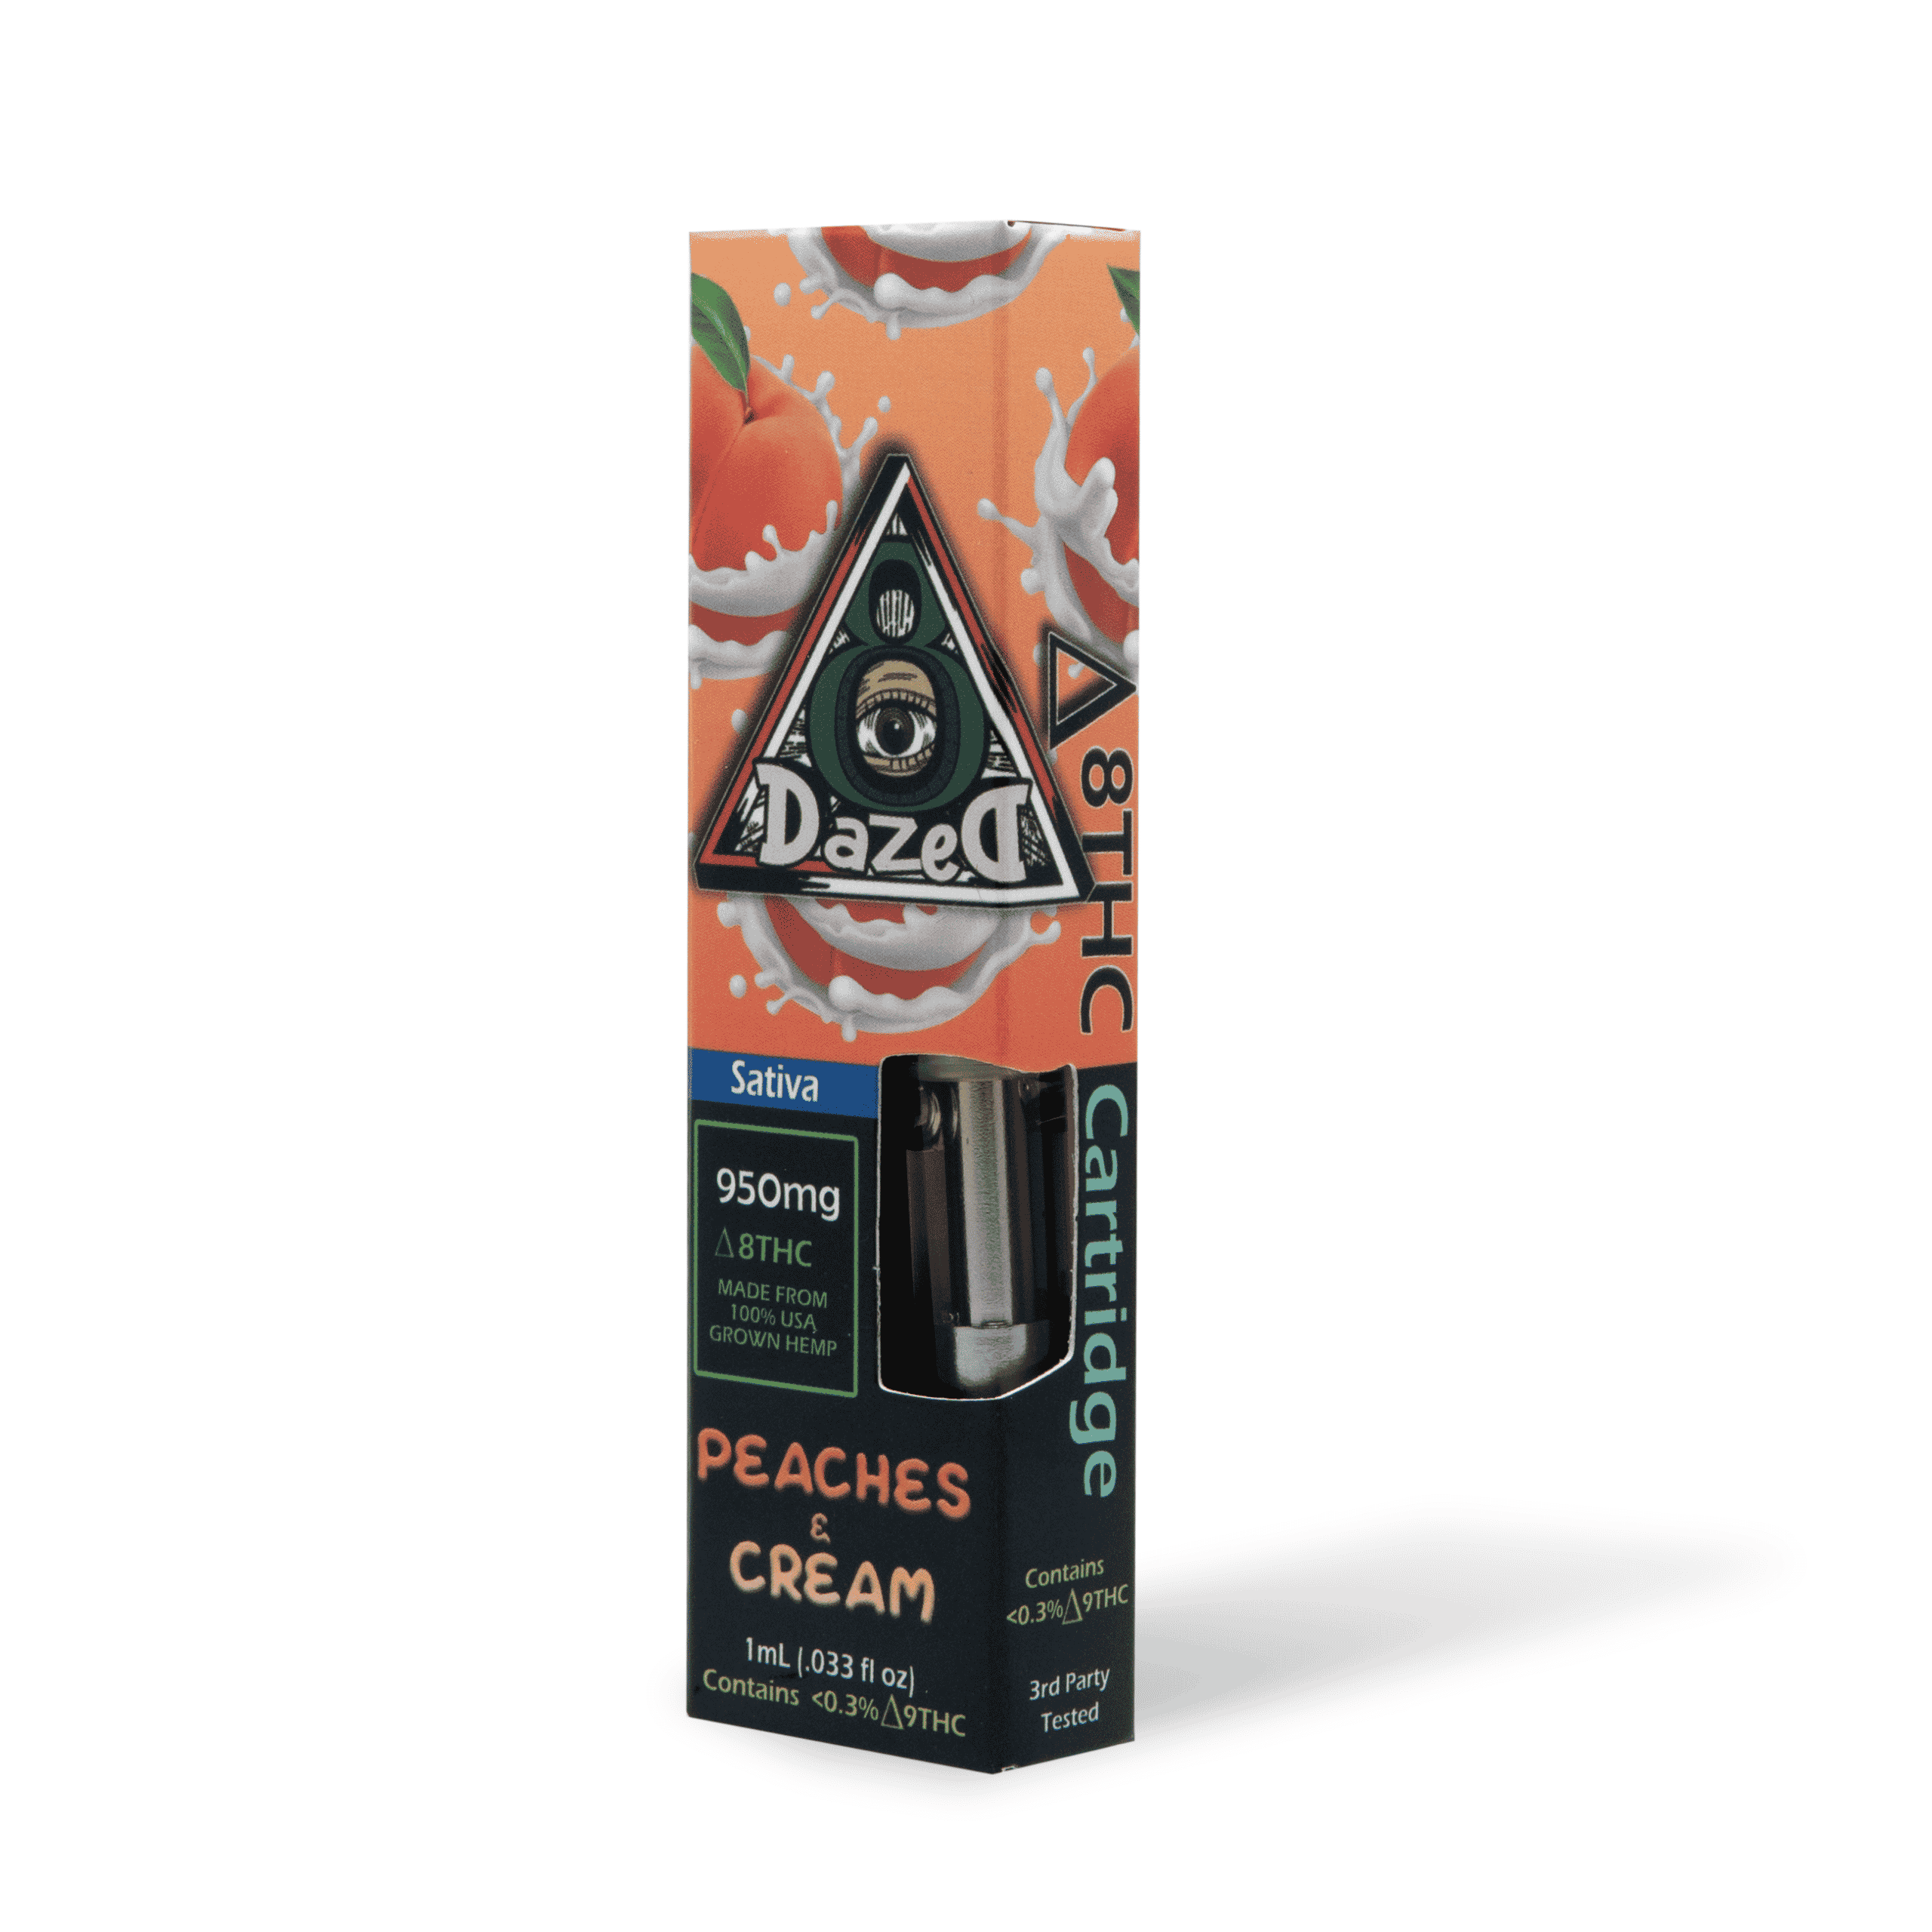 DazeD8 Peaches Cream Delta 8 Cartridge (1g) Best Price